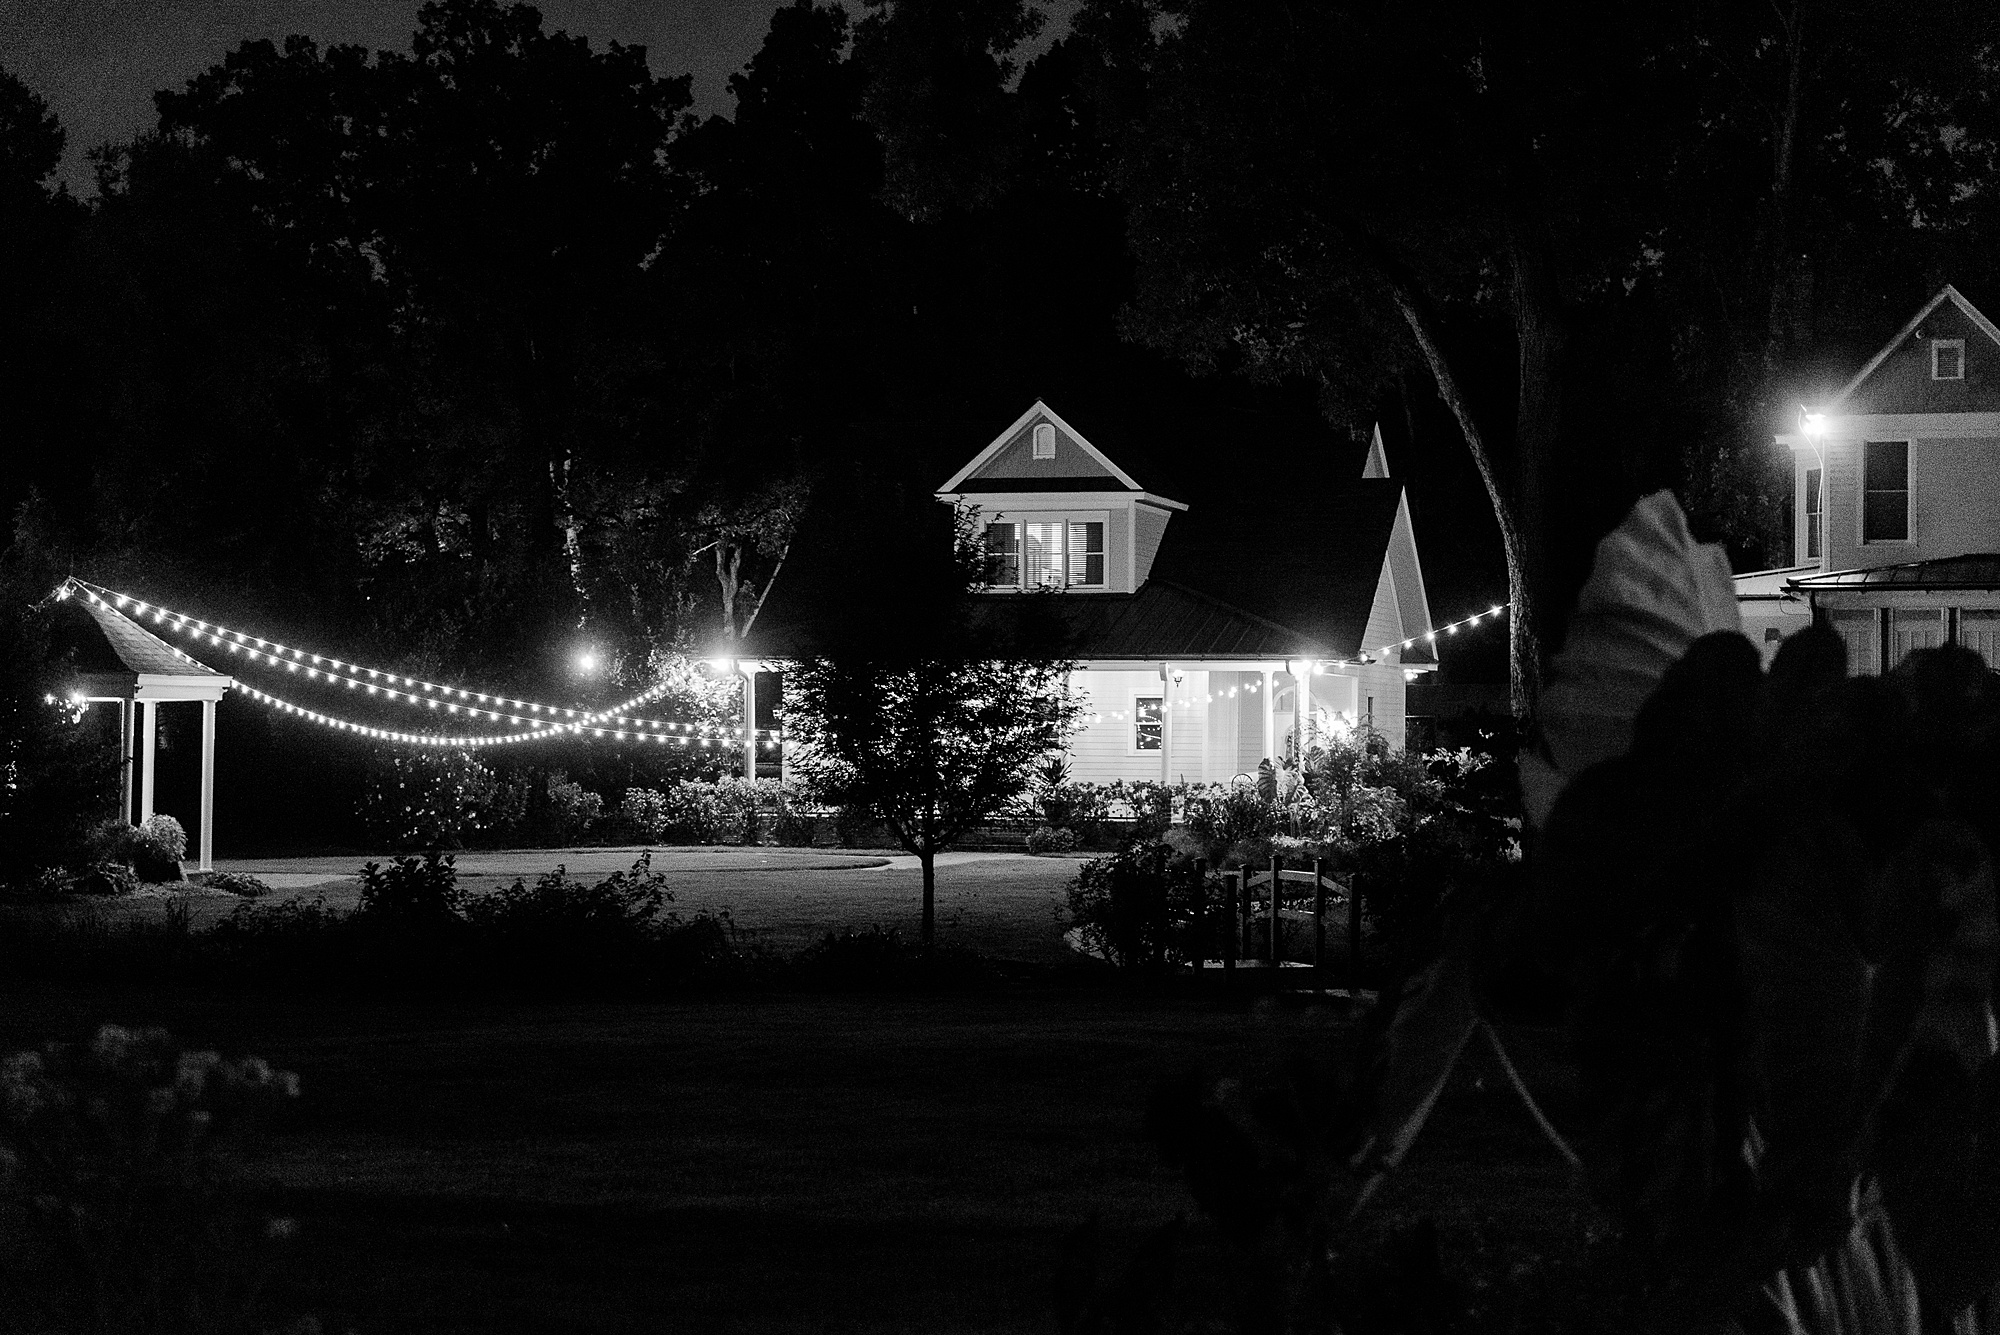 Alexander Homestead nighttime photo with lights